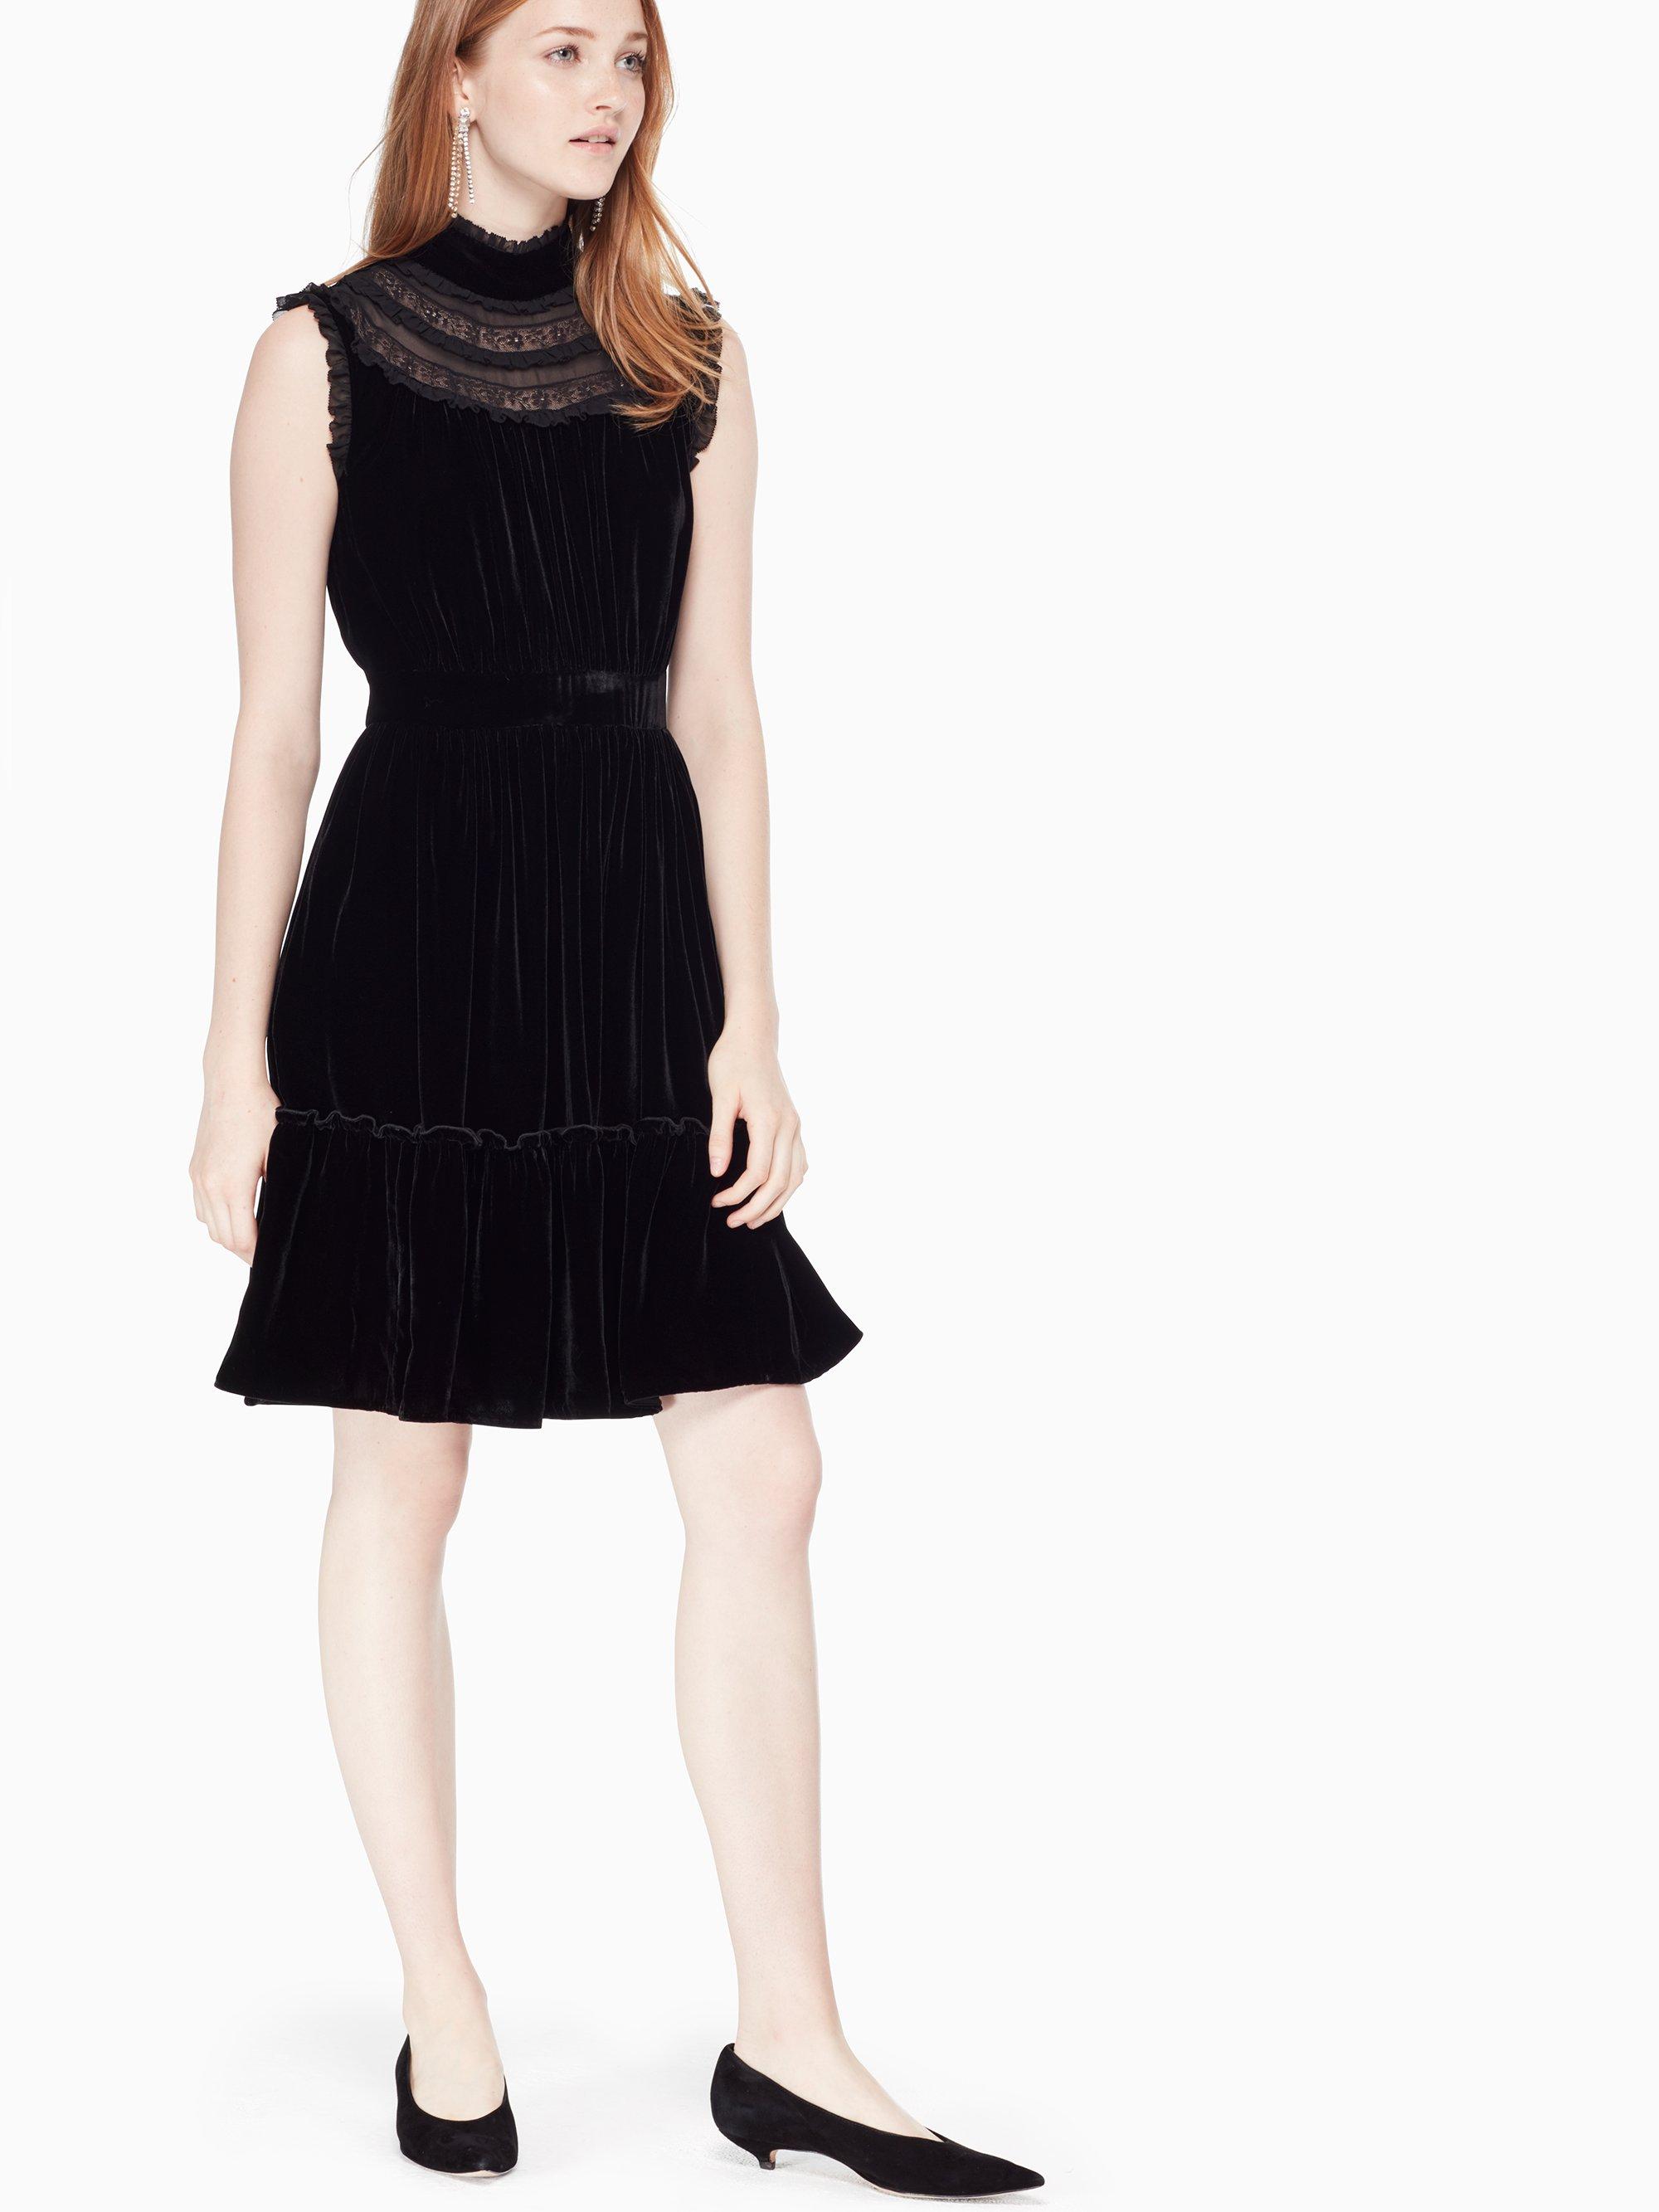 Kate Spade Velvet Lace Trim Dress in Black - Lyst